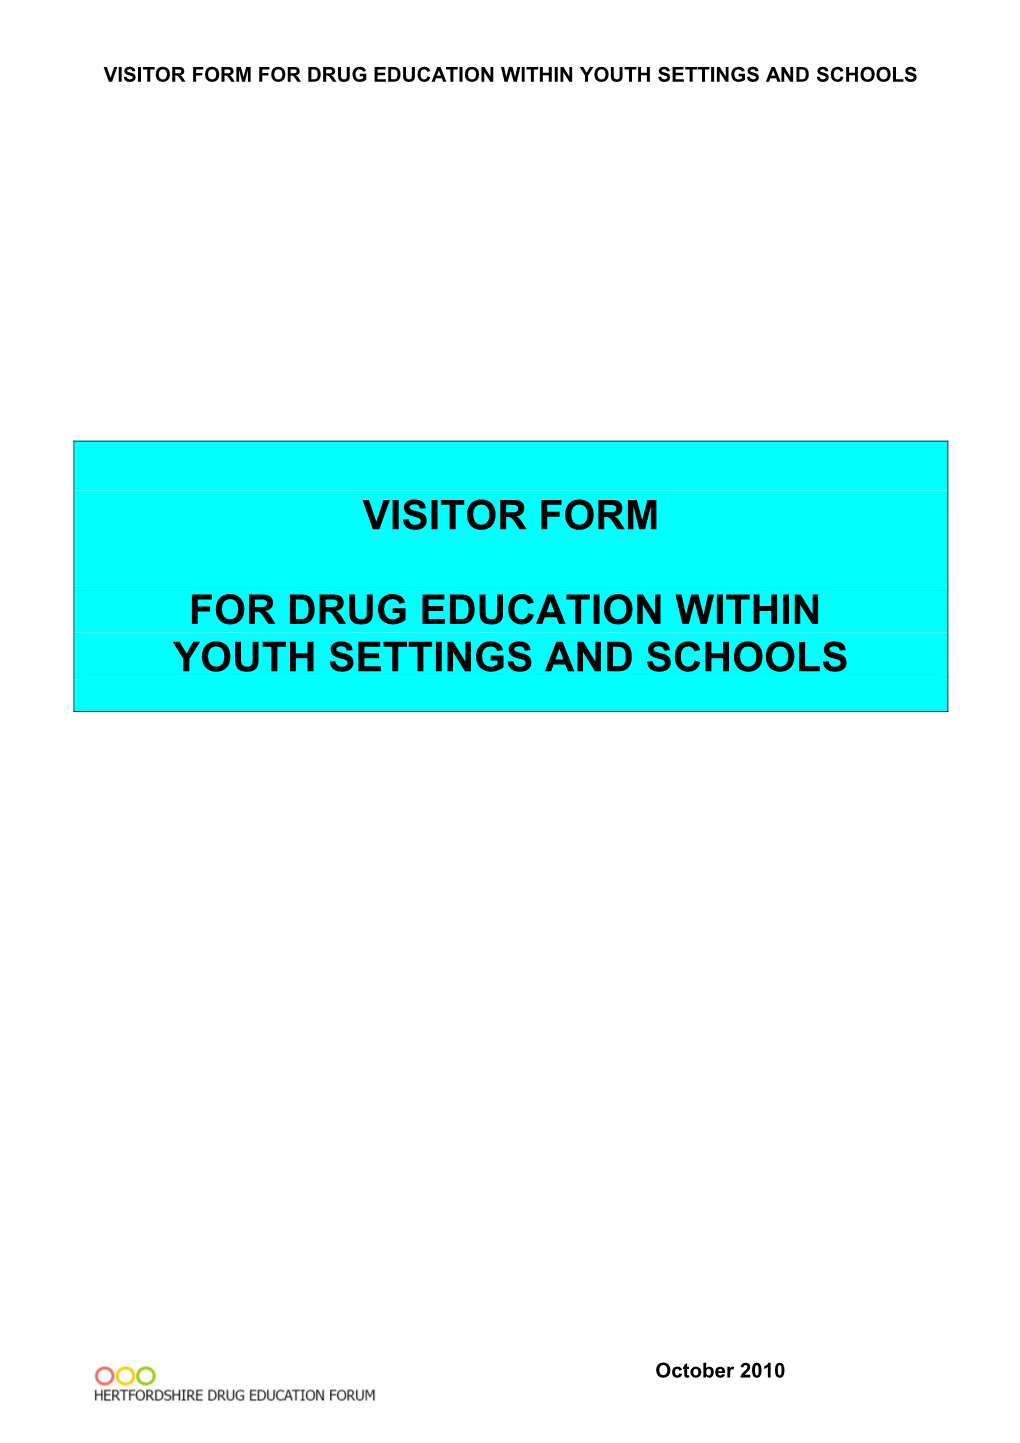 Planning Form Request for Drug Education in Hertfordshire